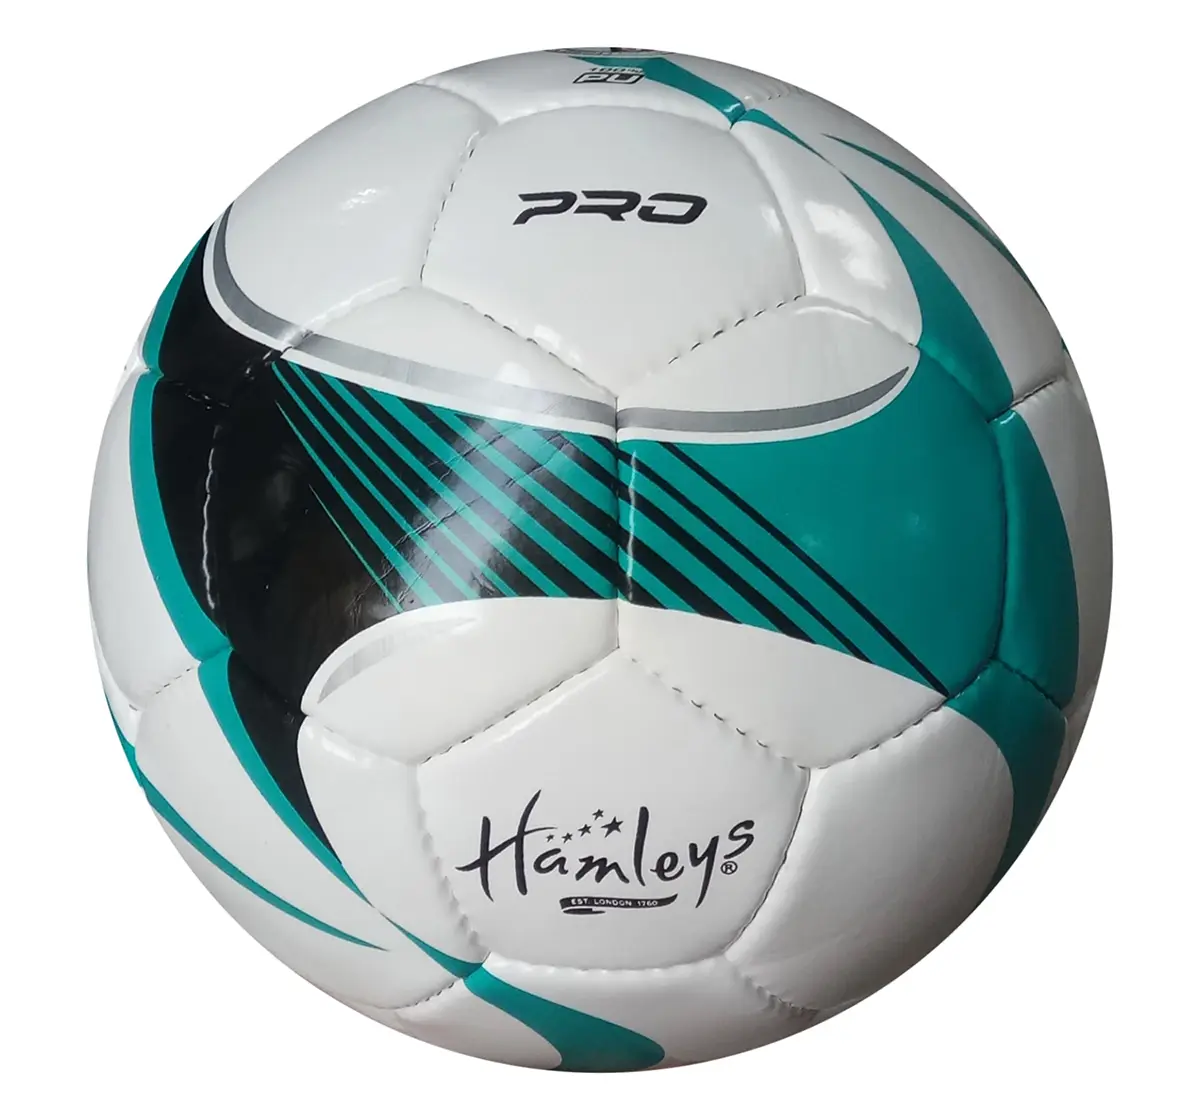 Hamleys Star PU Football for Kids age 1Y+ (White)